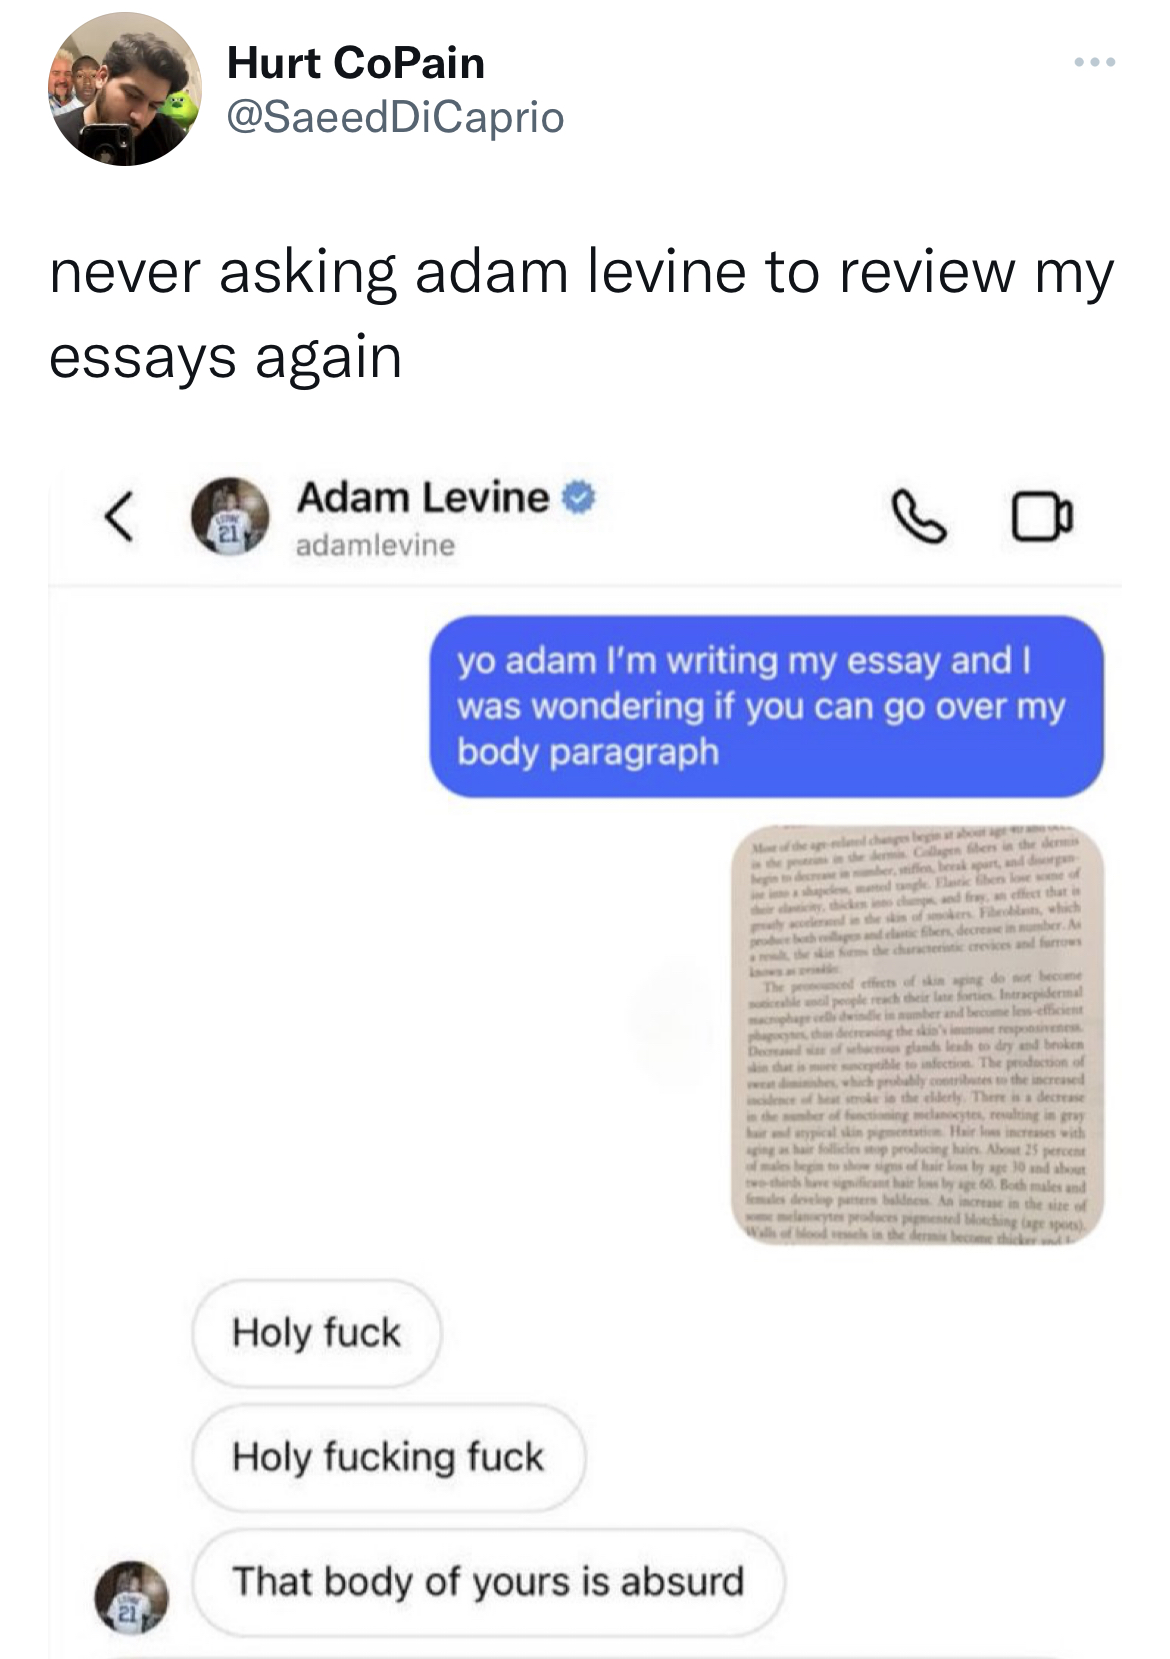 Adam Levine Sexting memes - material - Hurt CoPain never asking adam levine to review my essays again